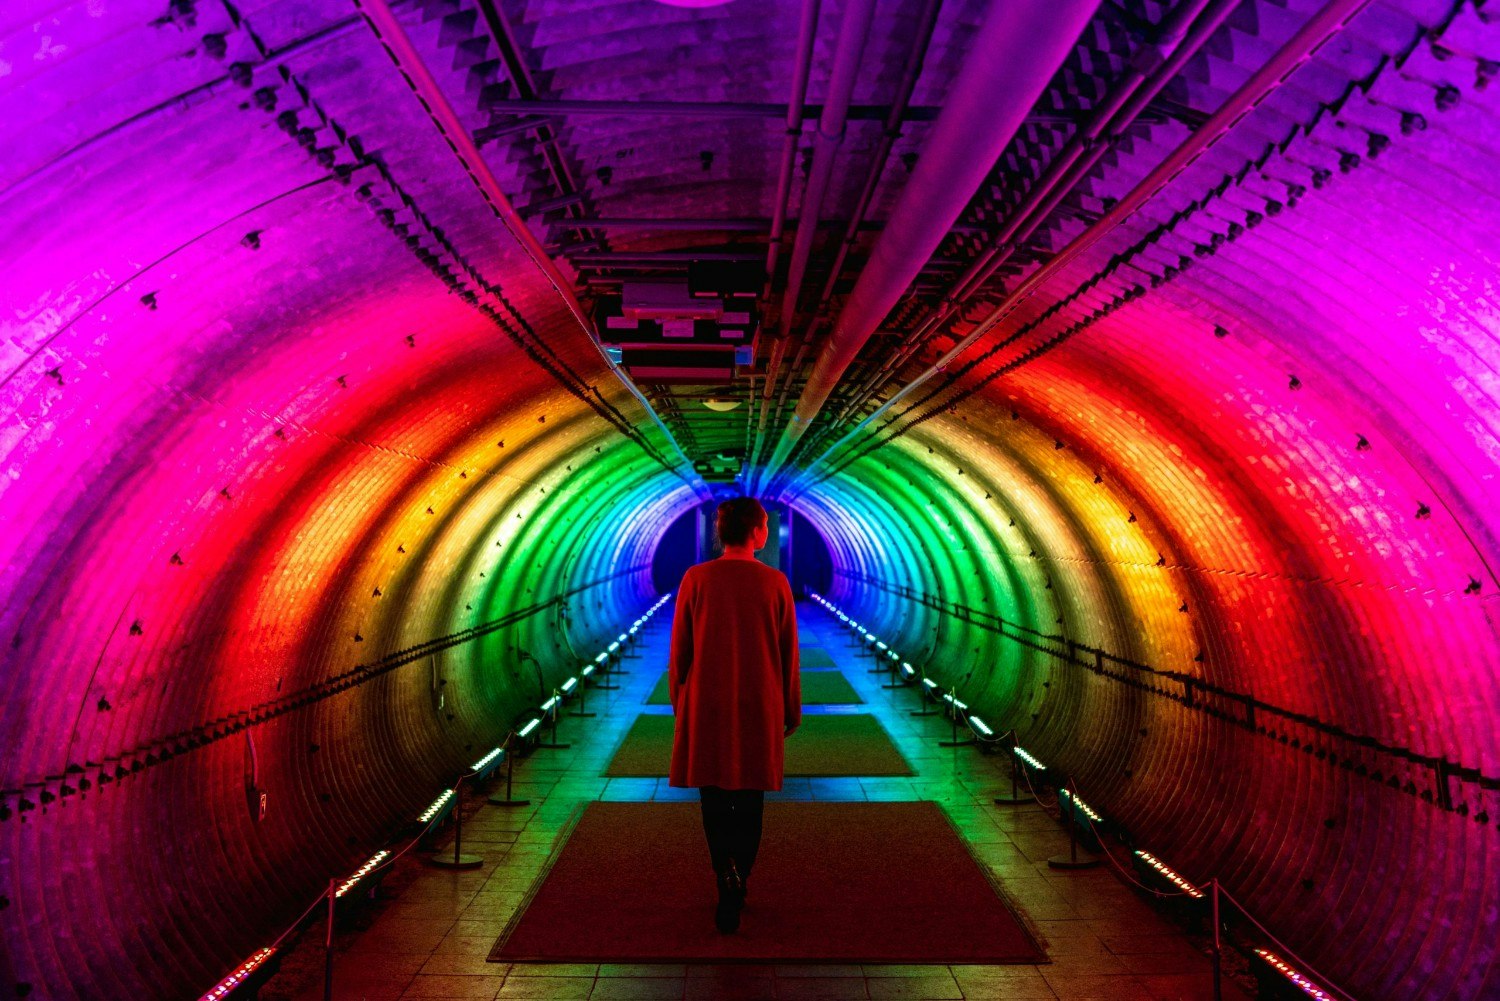 A kaleidescopic tunnel of lights